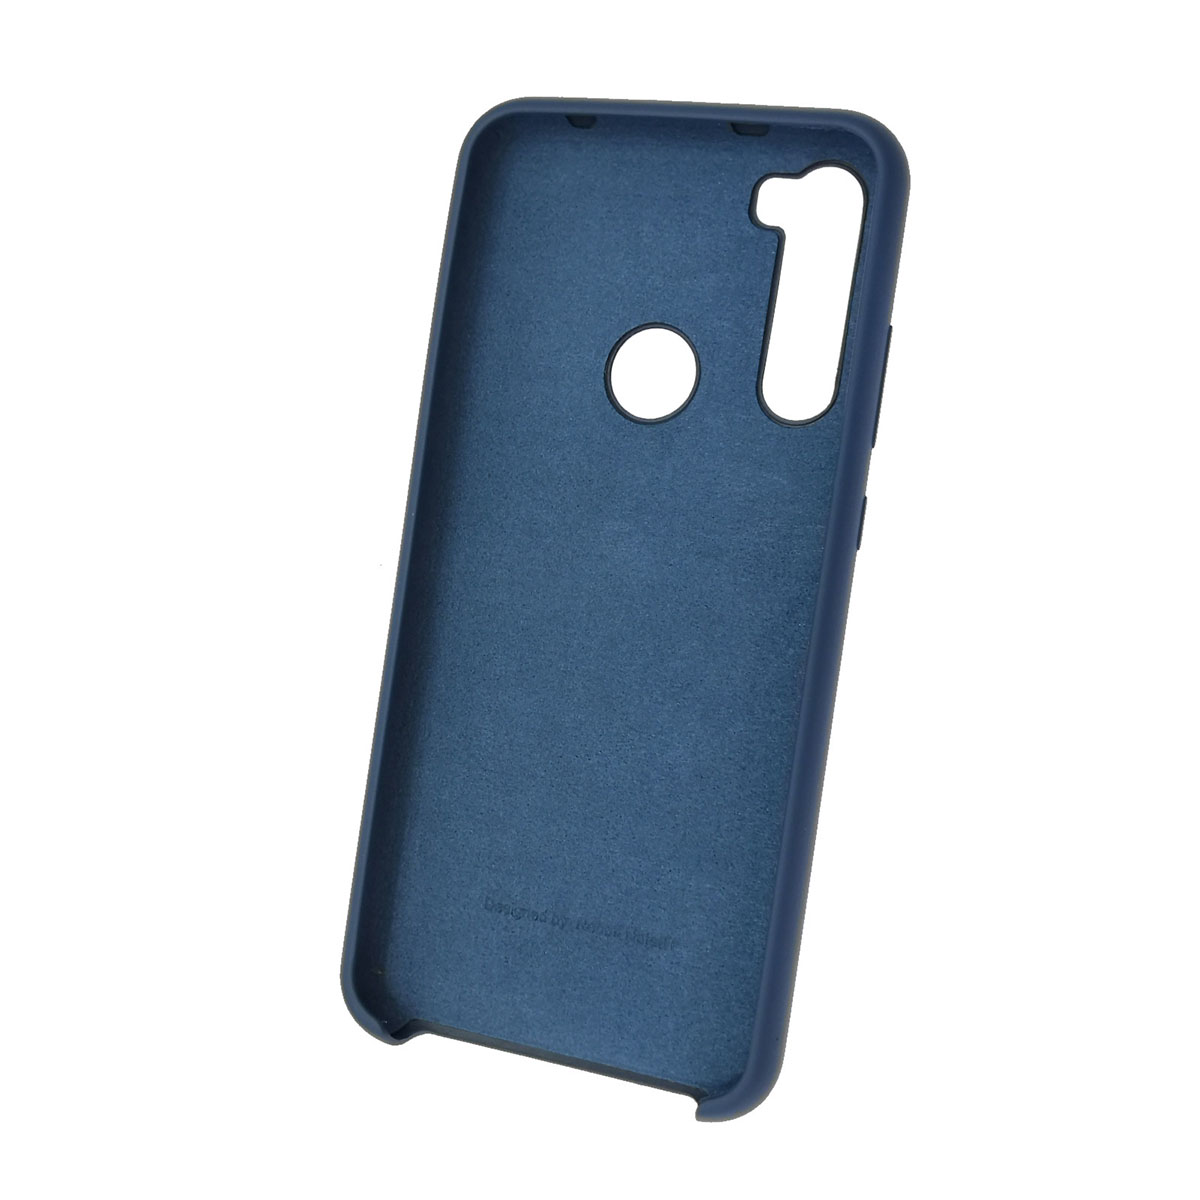 Чехол накладка Silicon Cover для XIAOMI Redmi Note 8T, силикон, бархат, цвет синий кобальт.